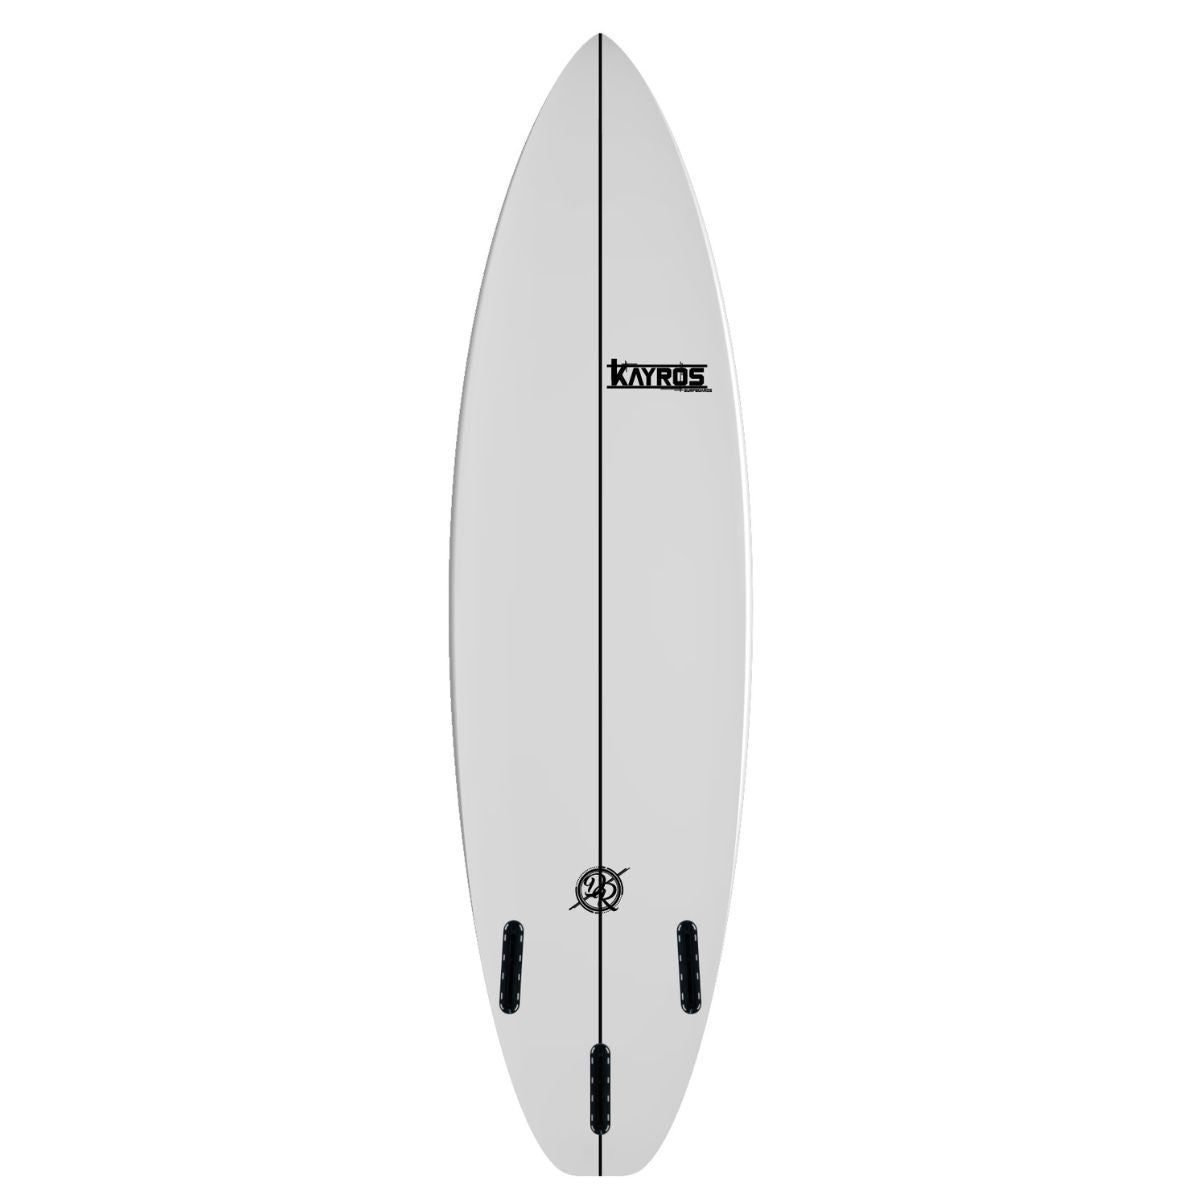 Power | Kayros Surfboards